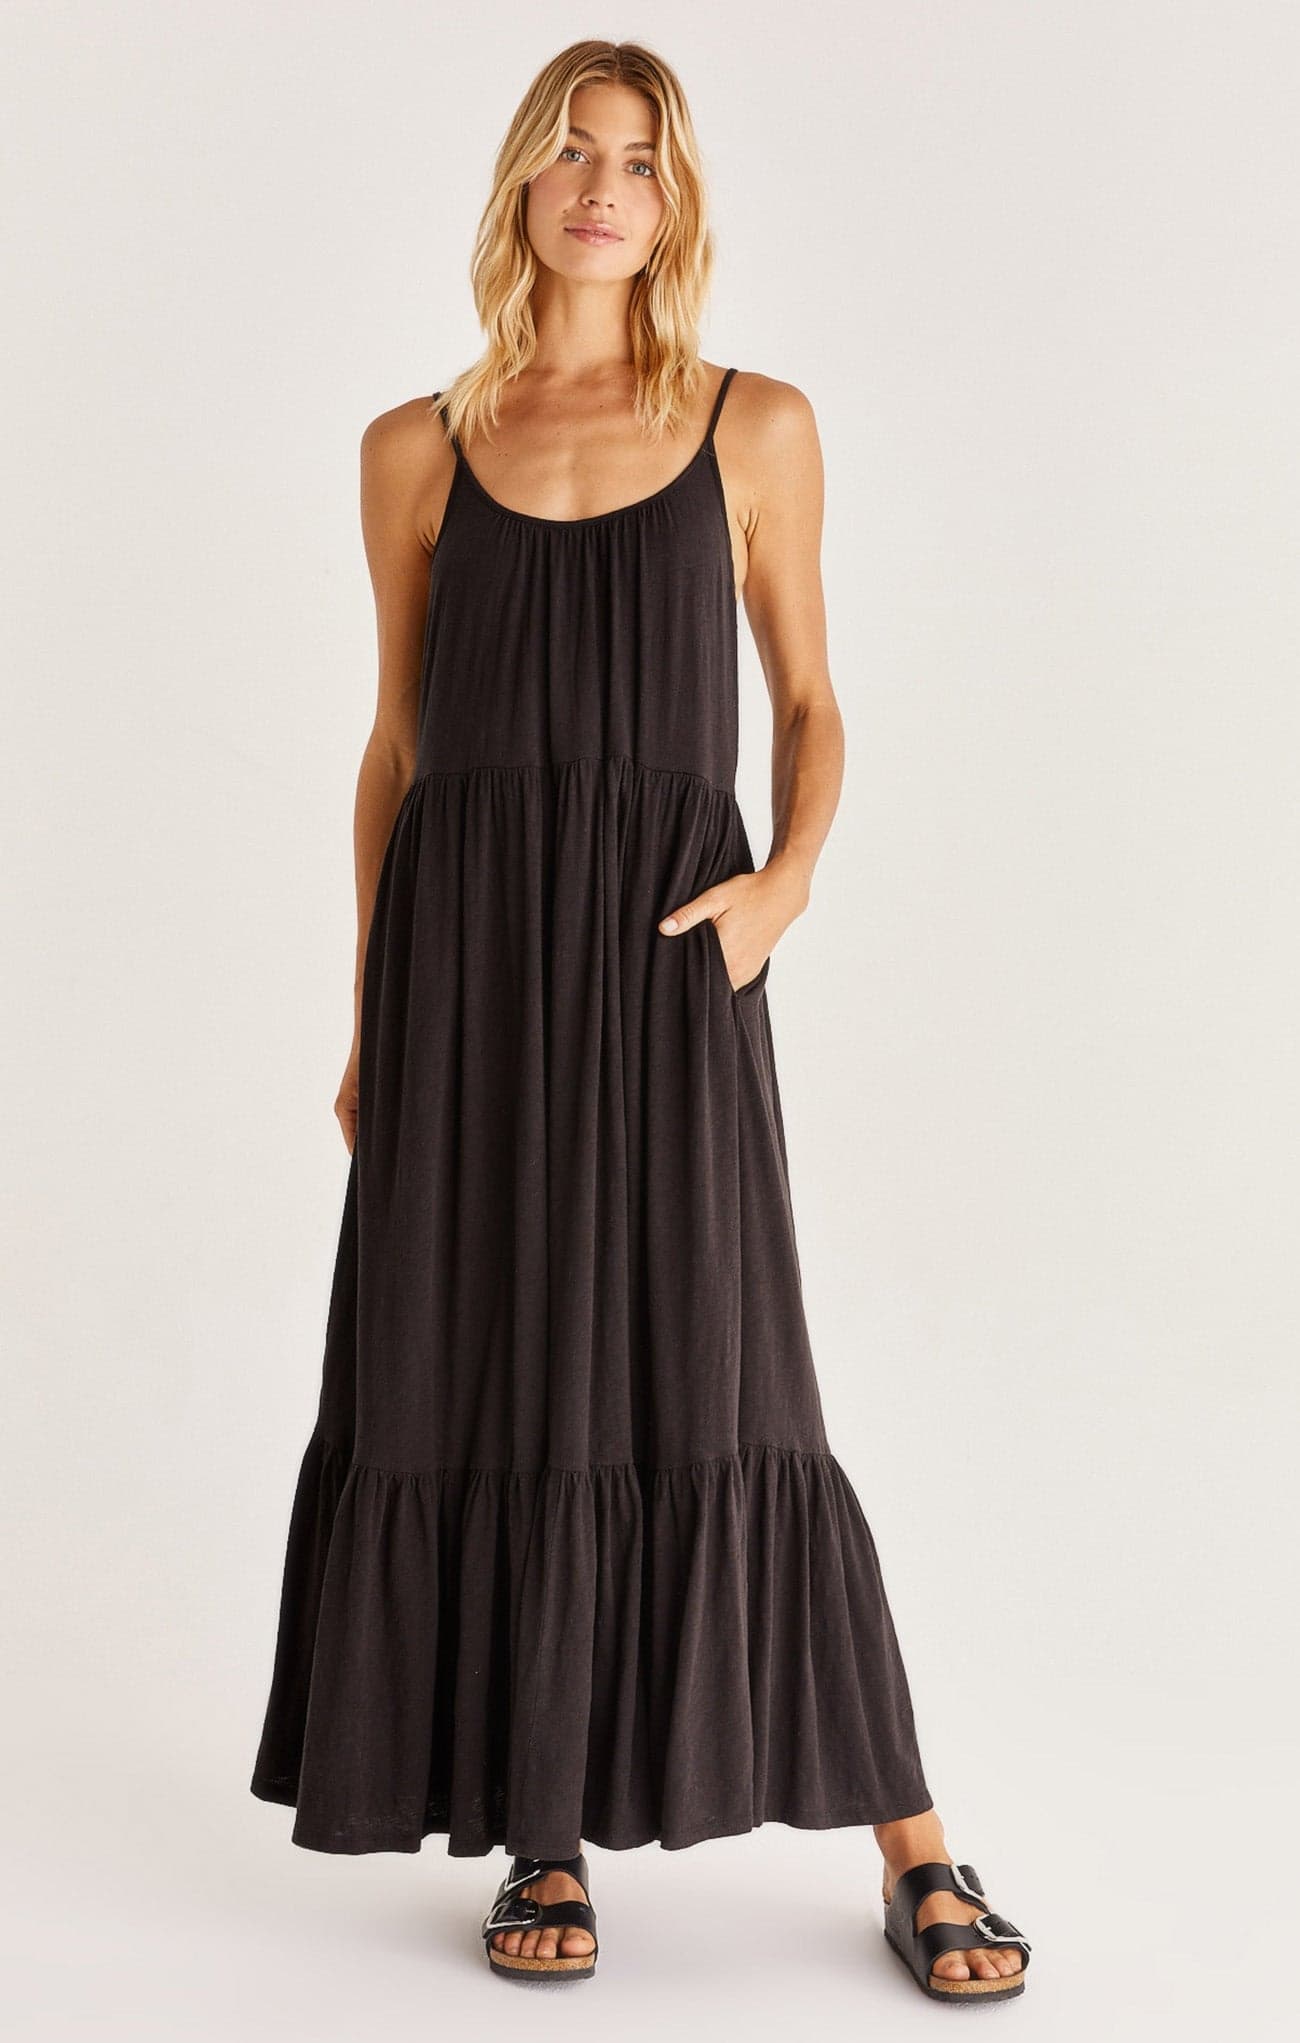 Z Supply Black Lido Slub Dress - Simply Beautiful Jewelry Design & Clothing